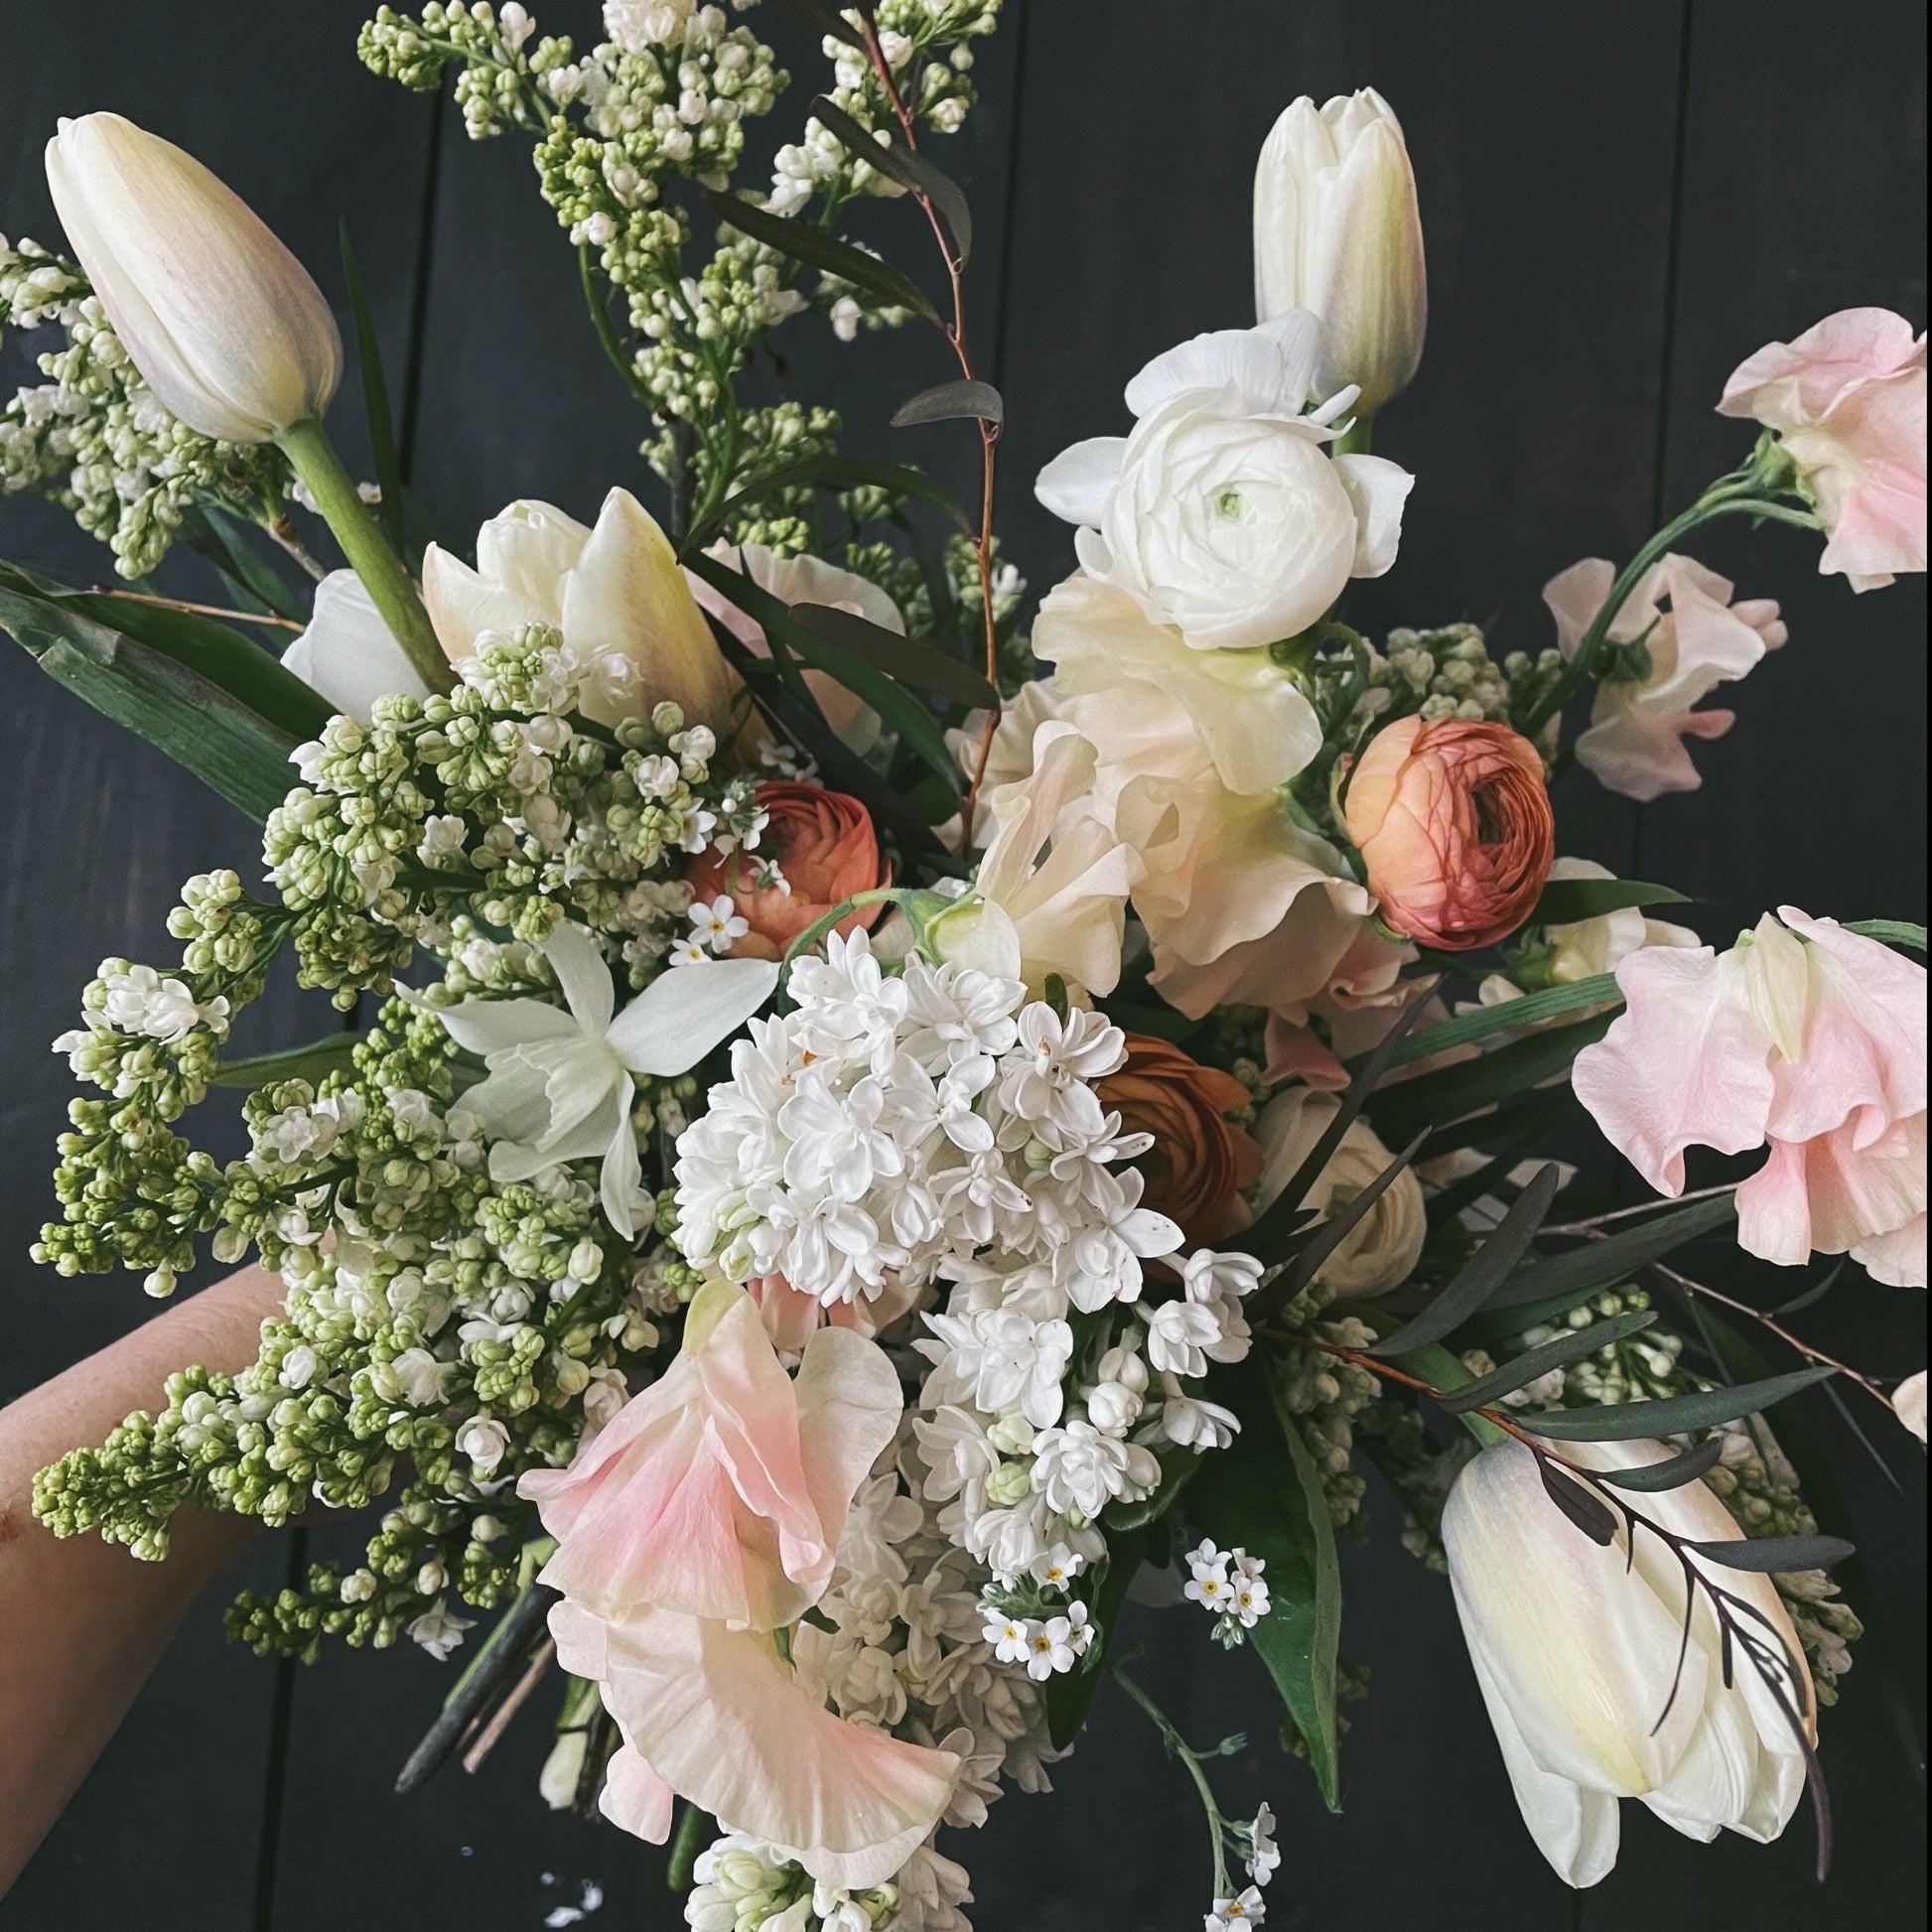 Send a Bouquet! - Arrangements - Hops Petunia Floral - Hops Petunia Floral